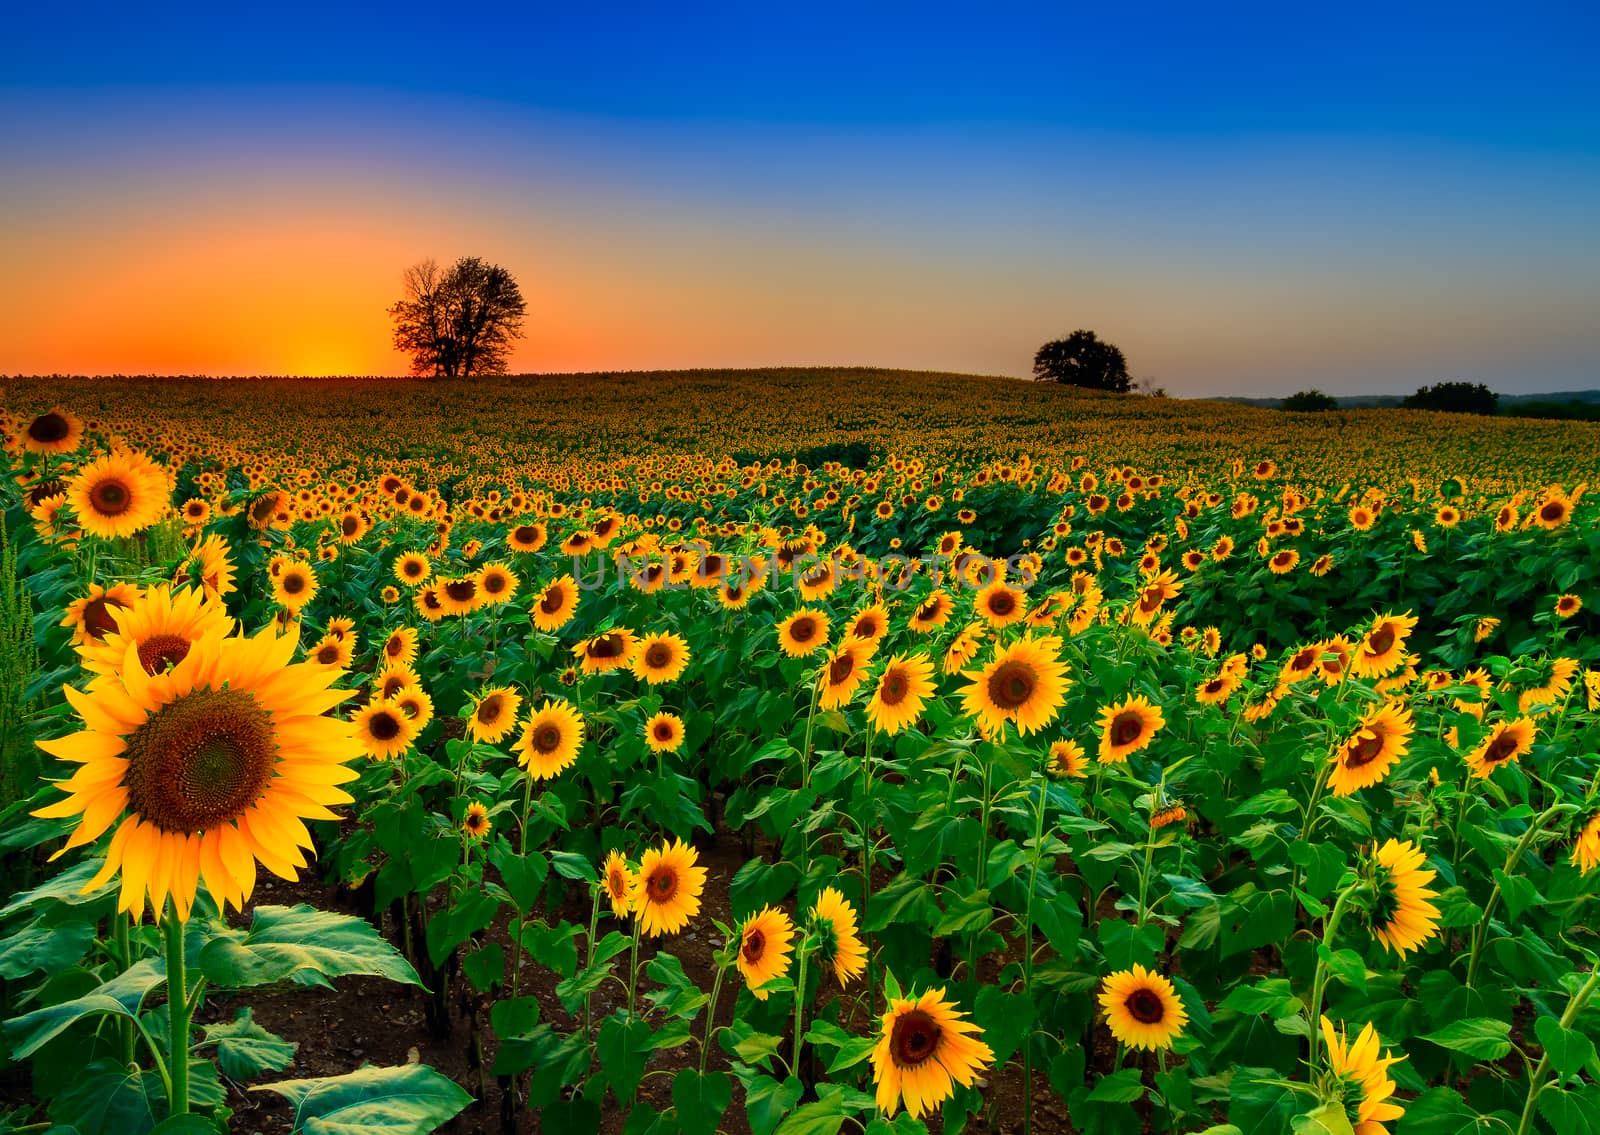 Rolling Field of Sunflowers by TommyBrison